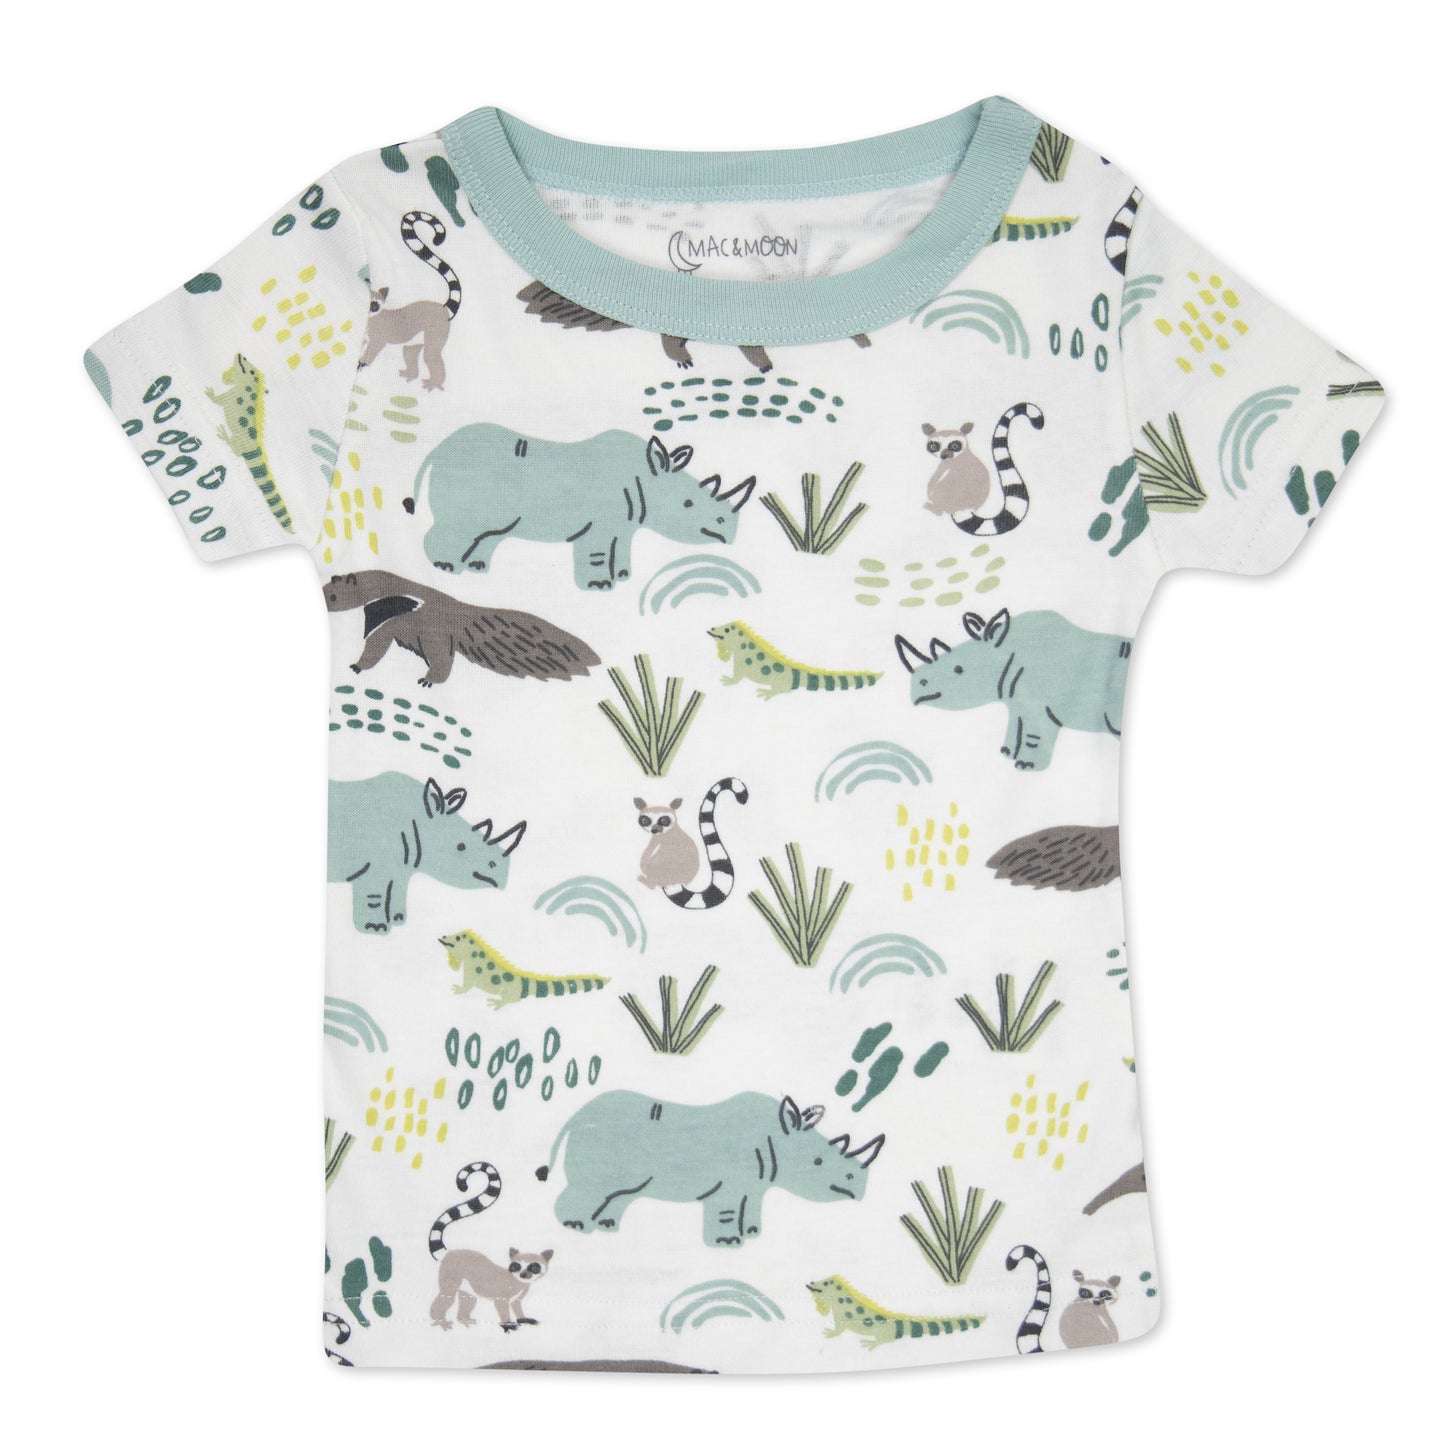 Organic Cotton 4-Piece Pajama Set in Rhino Friends Print